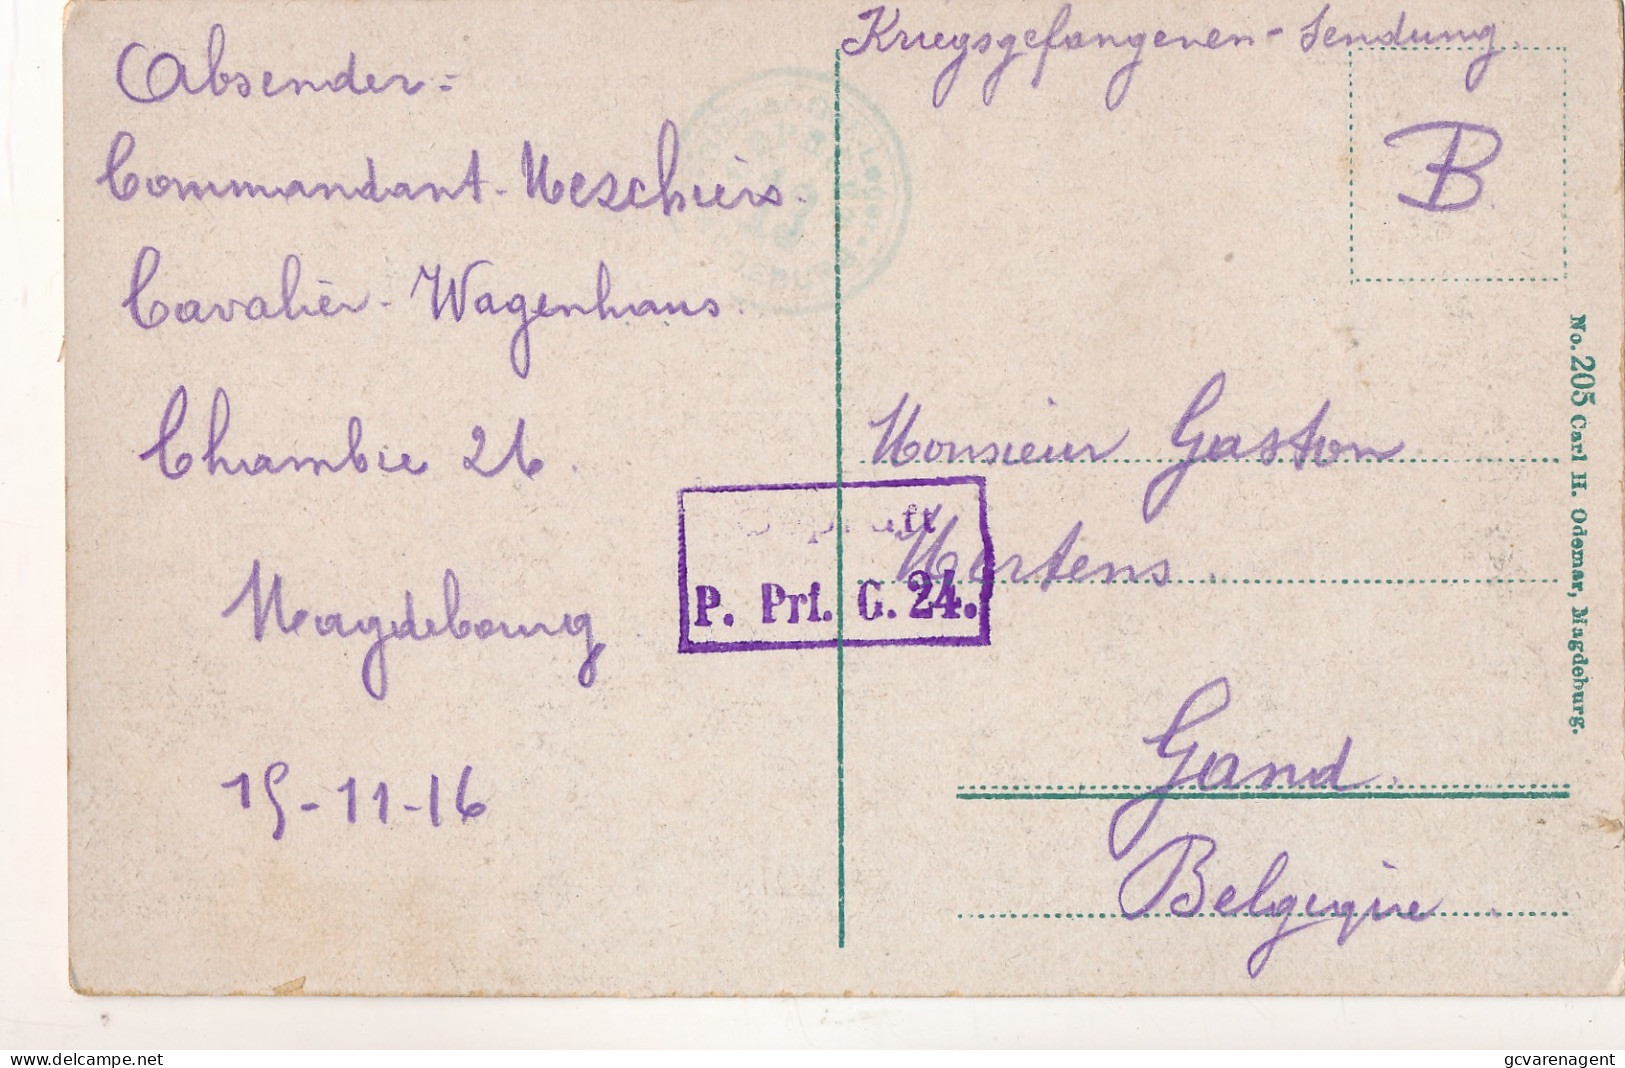 1916  COMMADANT UESCHIERS CAVALIER WAGENHAUS CHAMBRE 26 MAGDEBOURG TO GAND BELGIUM      2  SCANS - Prisoners